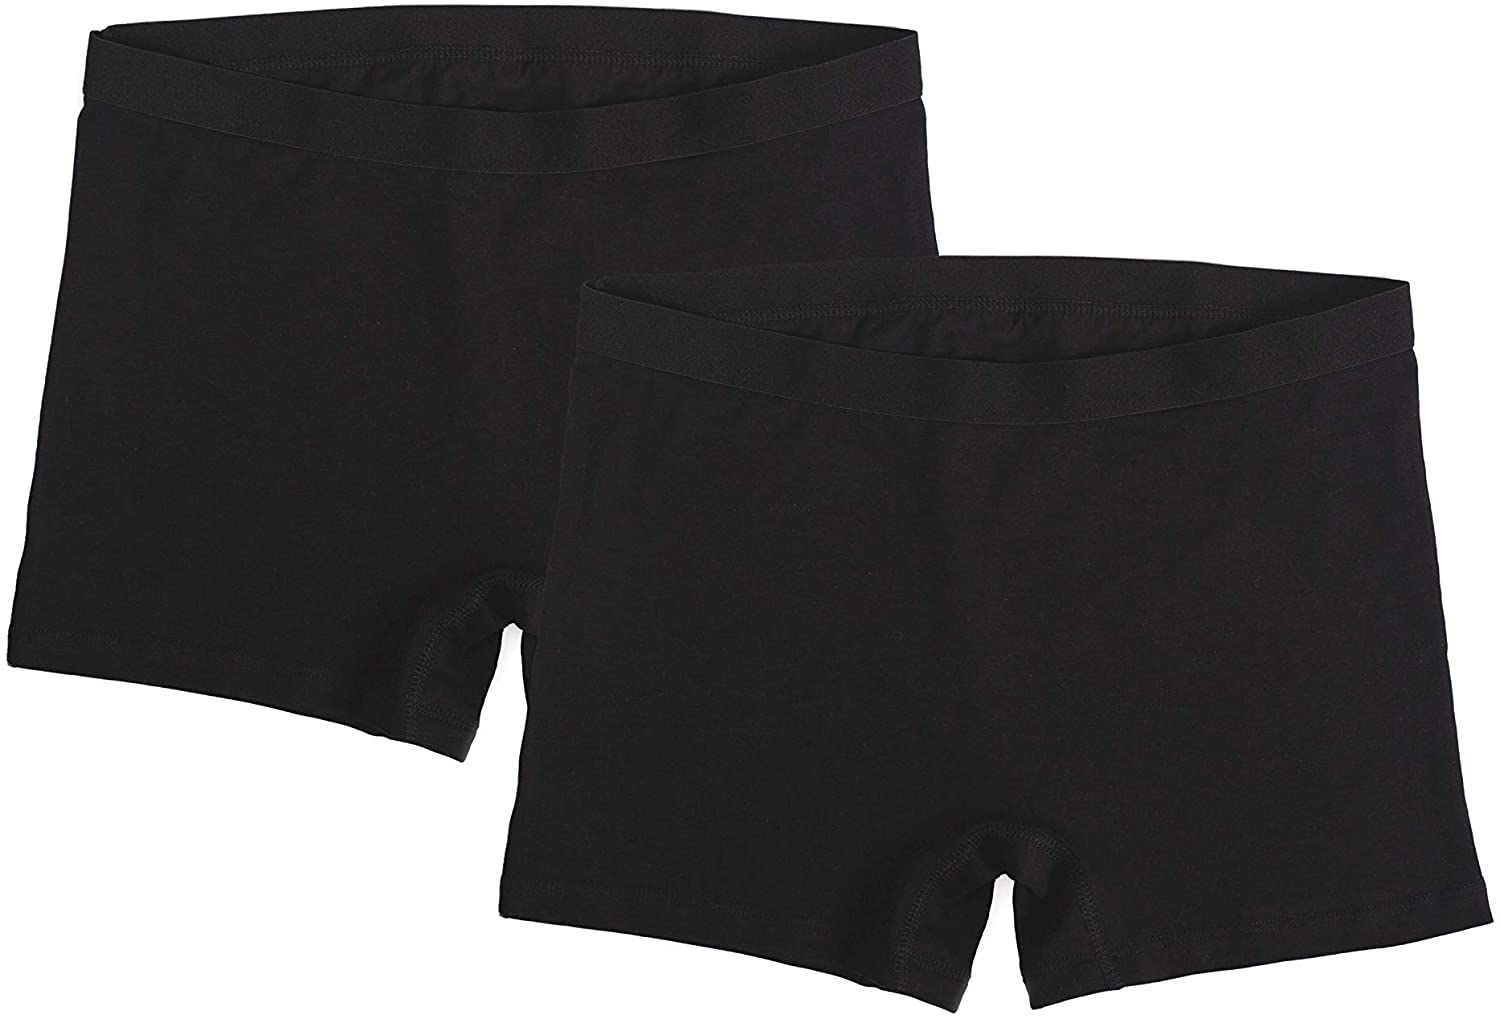 EVARI Women's Boyshort Panties Comfortable Cotton Underwear Pack of 5 ...